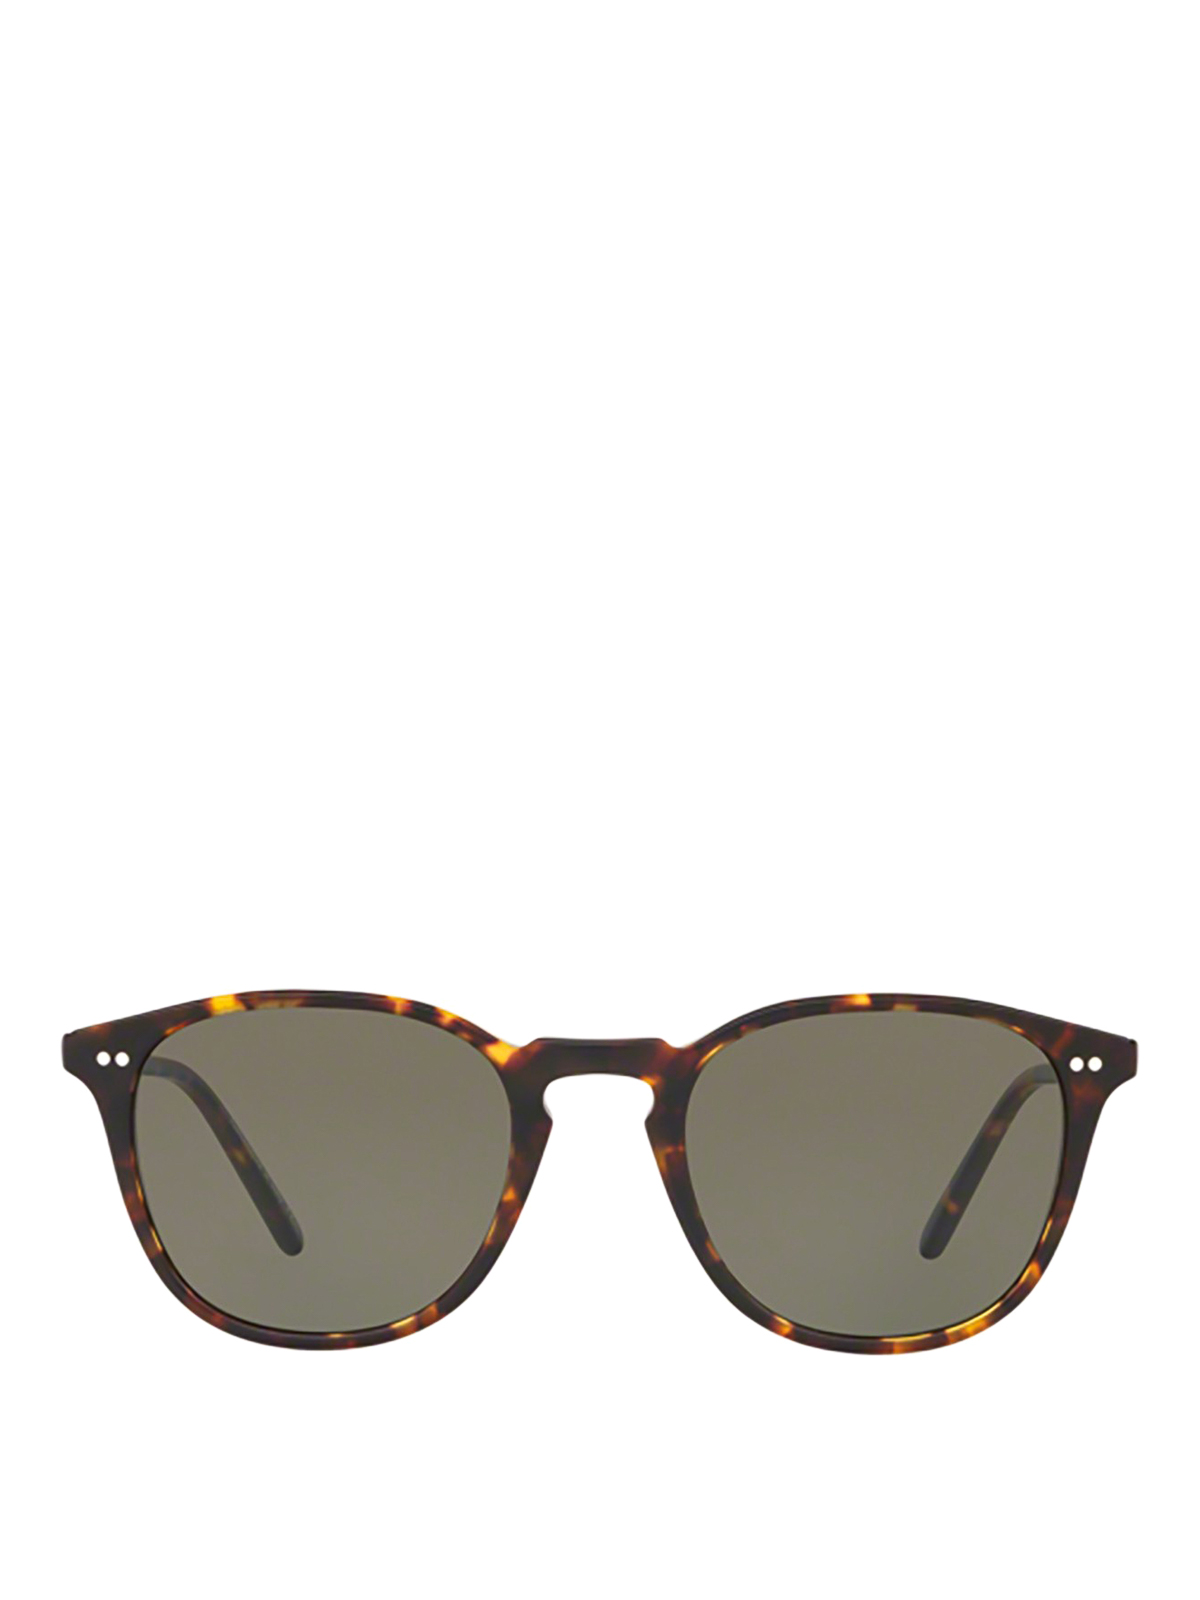 Sunglasses Oliver Peoples - Forman L.A tortoiseshell sunglasses ...